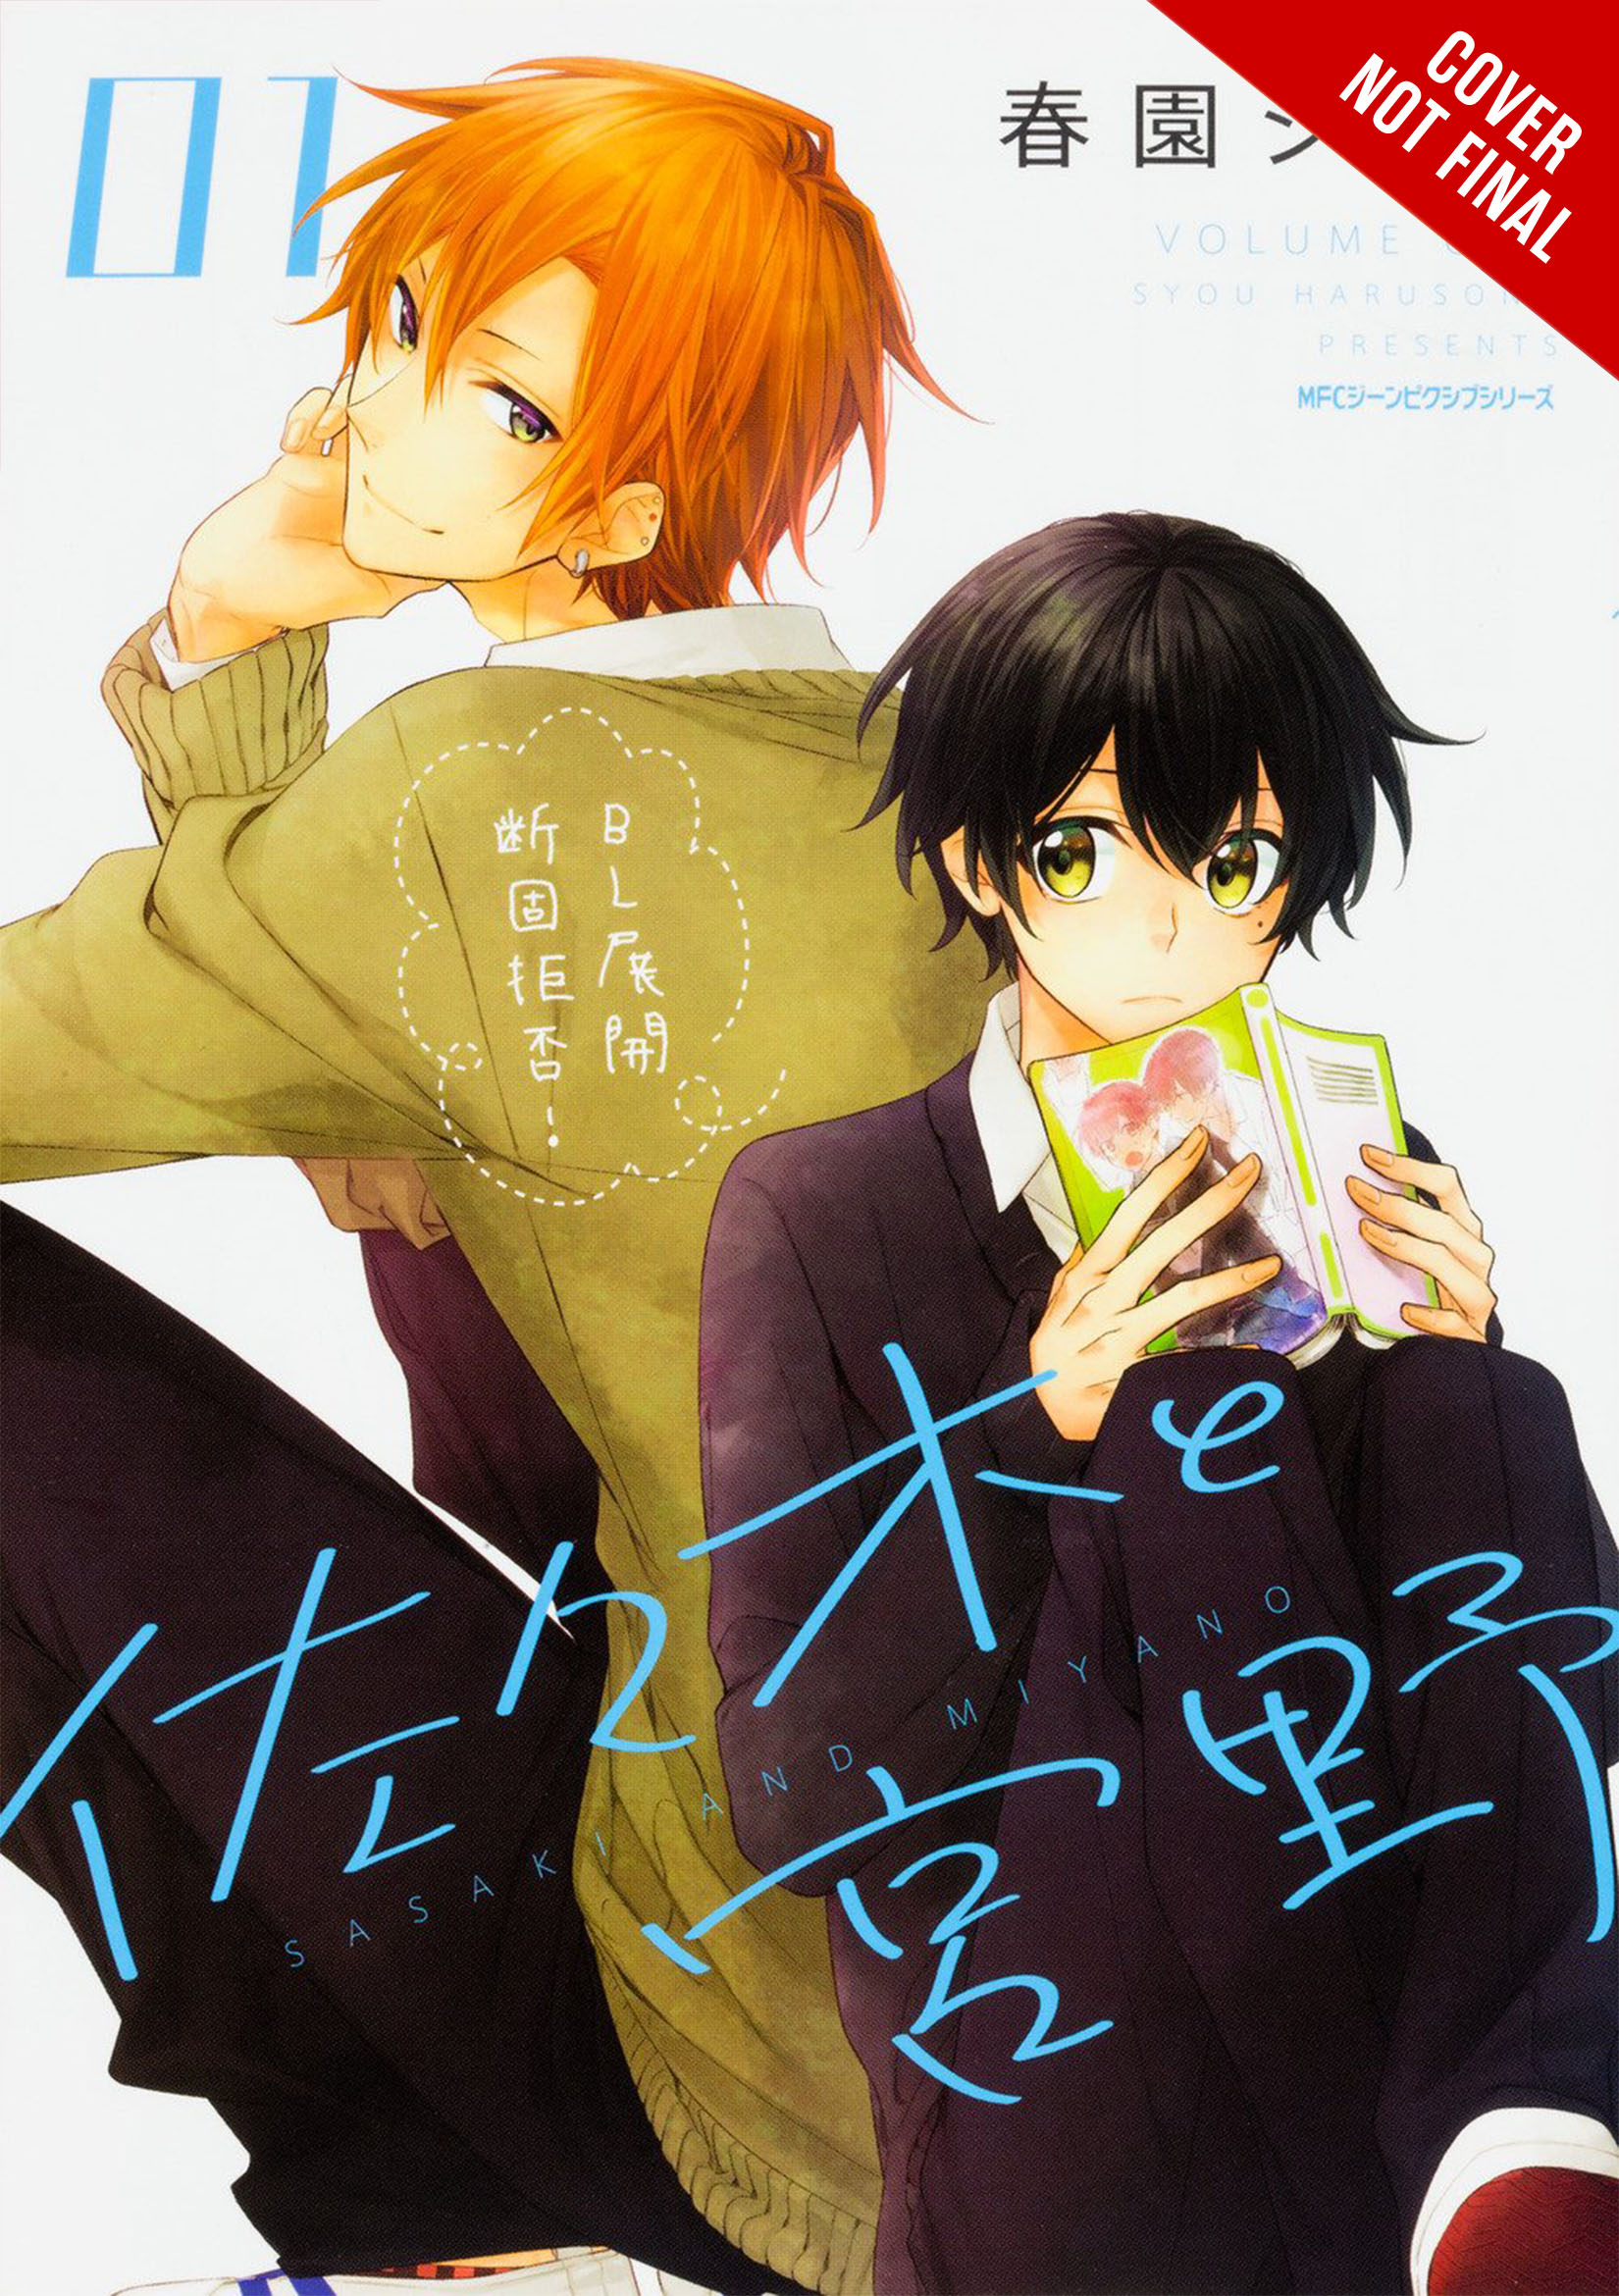 Yen Press Acquires 13 New Manga & Light Novel Titles Set for Print and